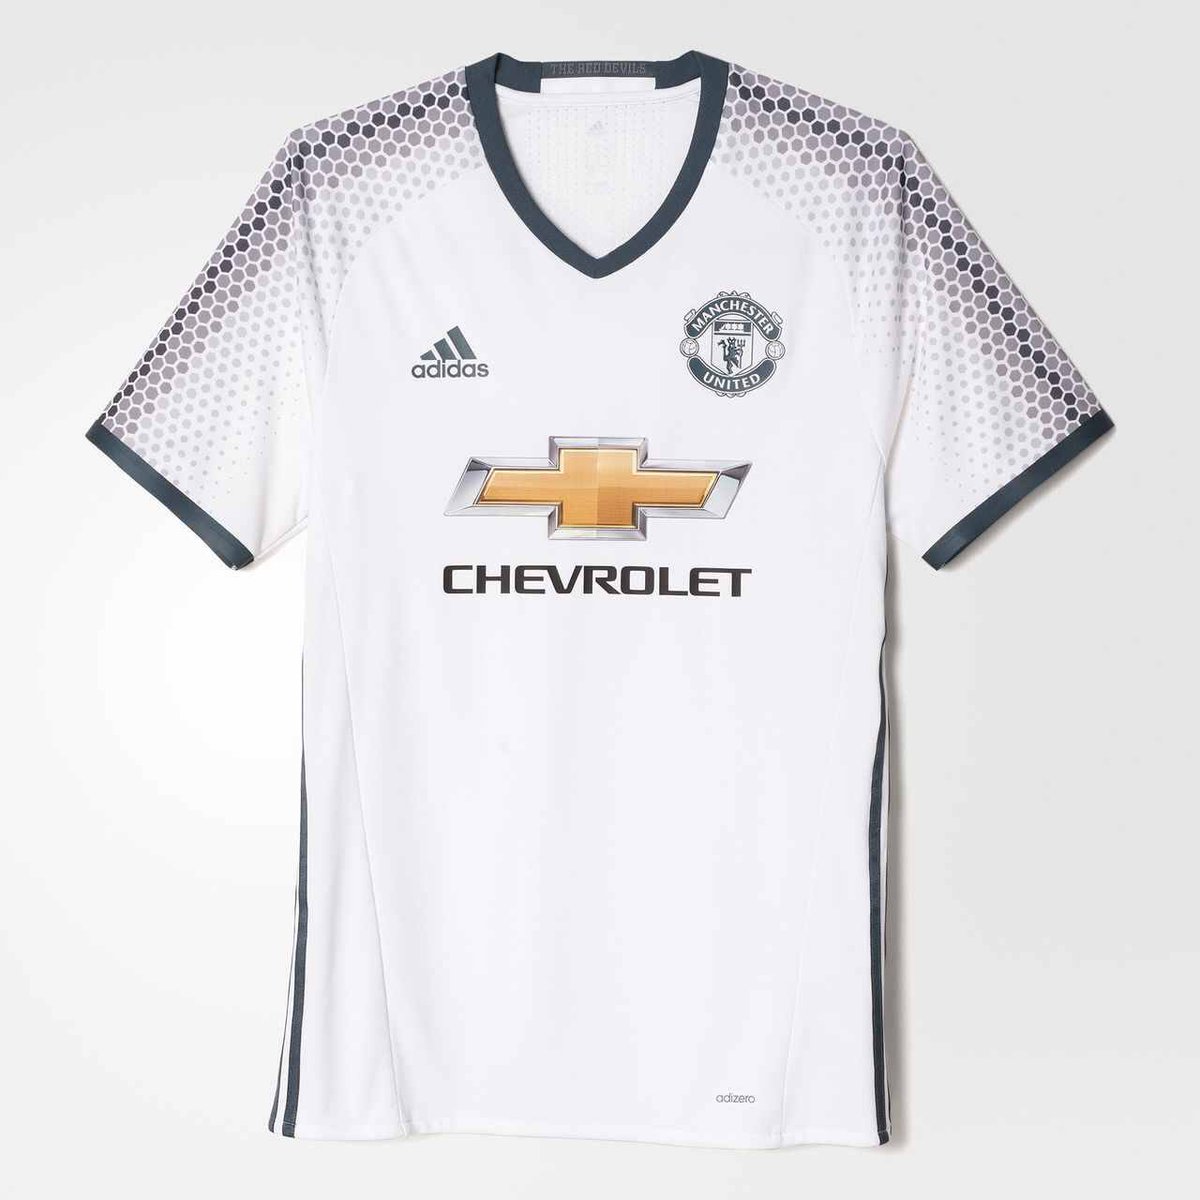 Manchester United Alternate Kit : Adidas Launch Manchester United 20 21 ...